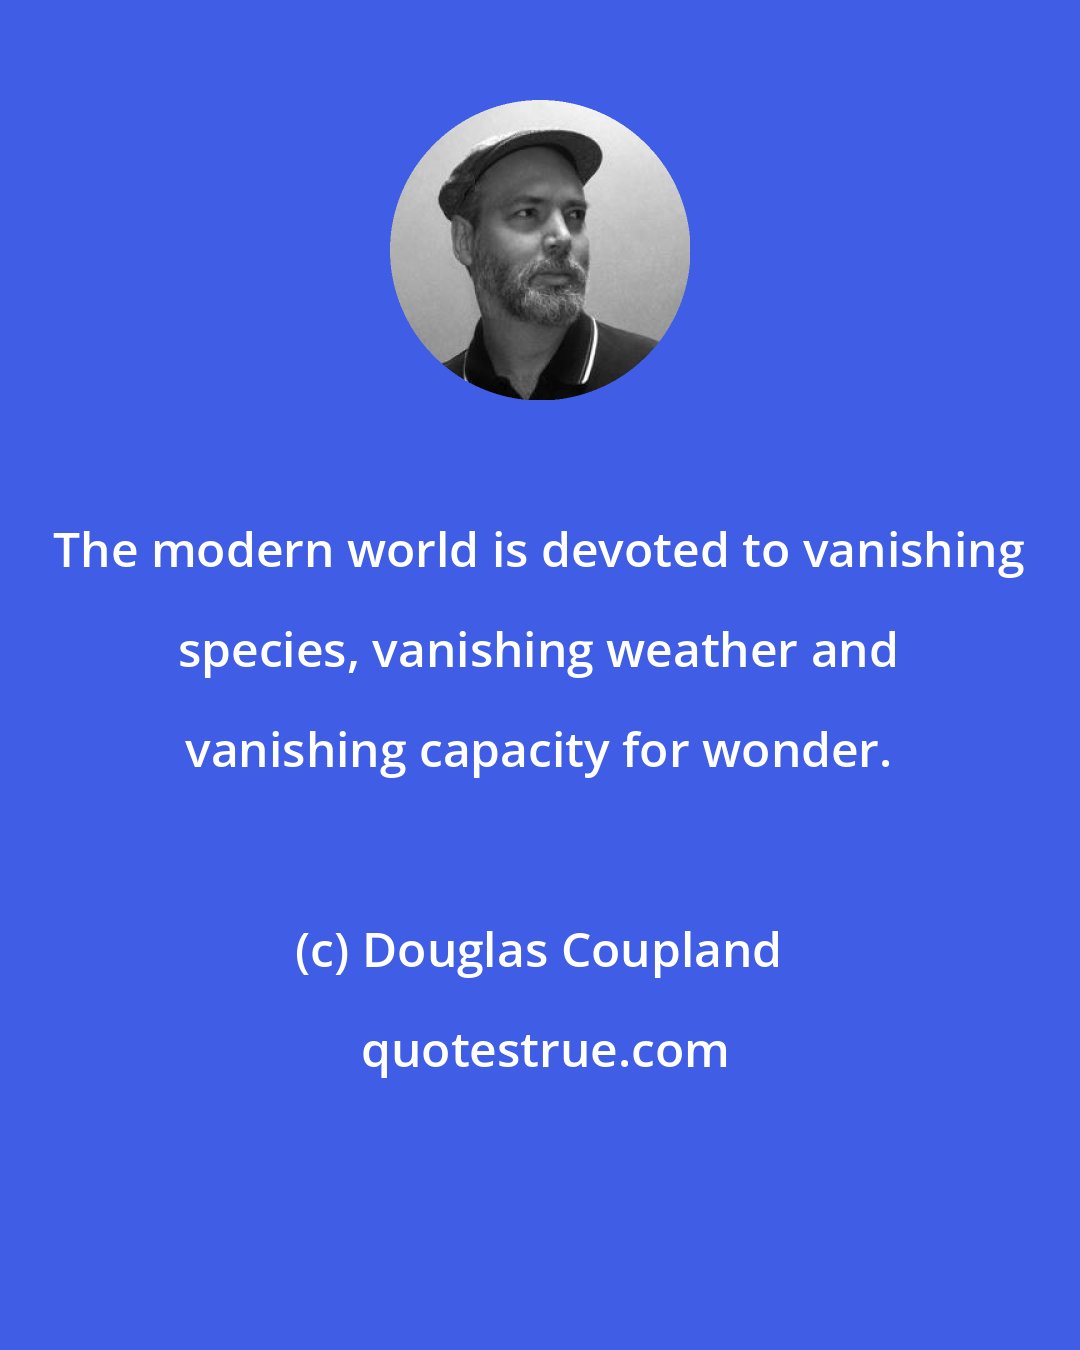 Douglas Coupland: The modern world is devoted to vanishing species, vanishing weather and vanishing capacity for wonder.